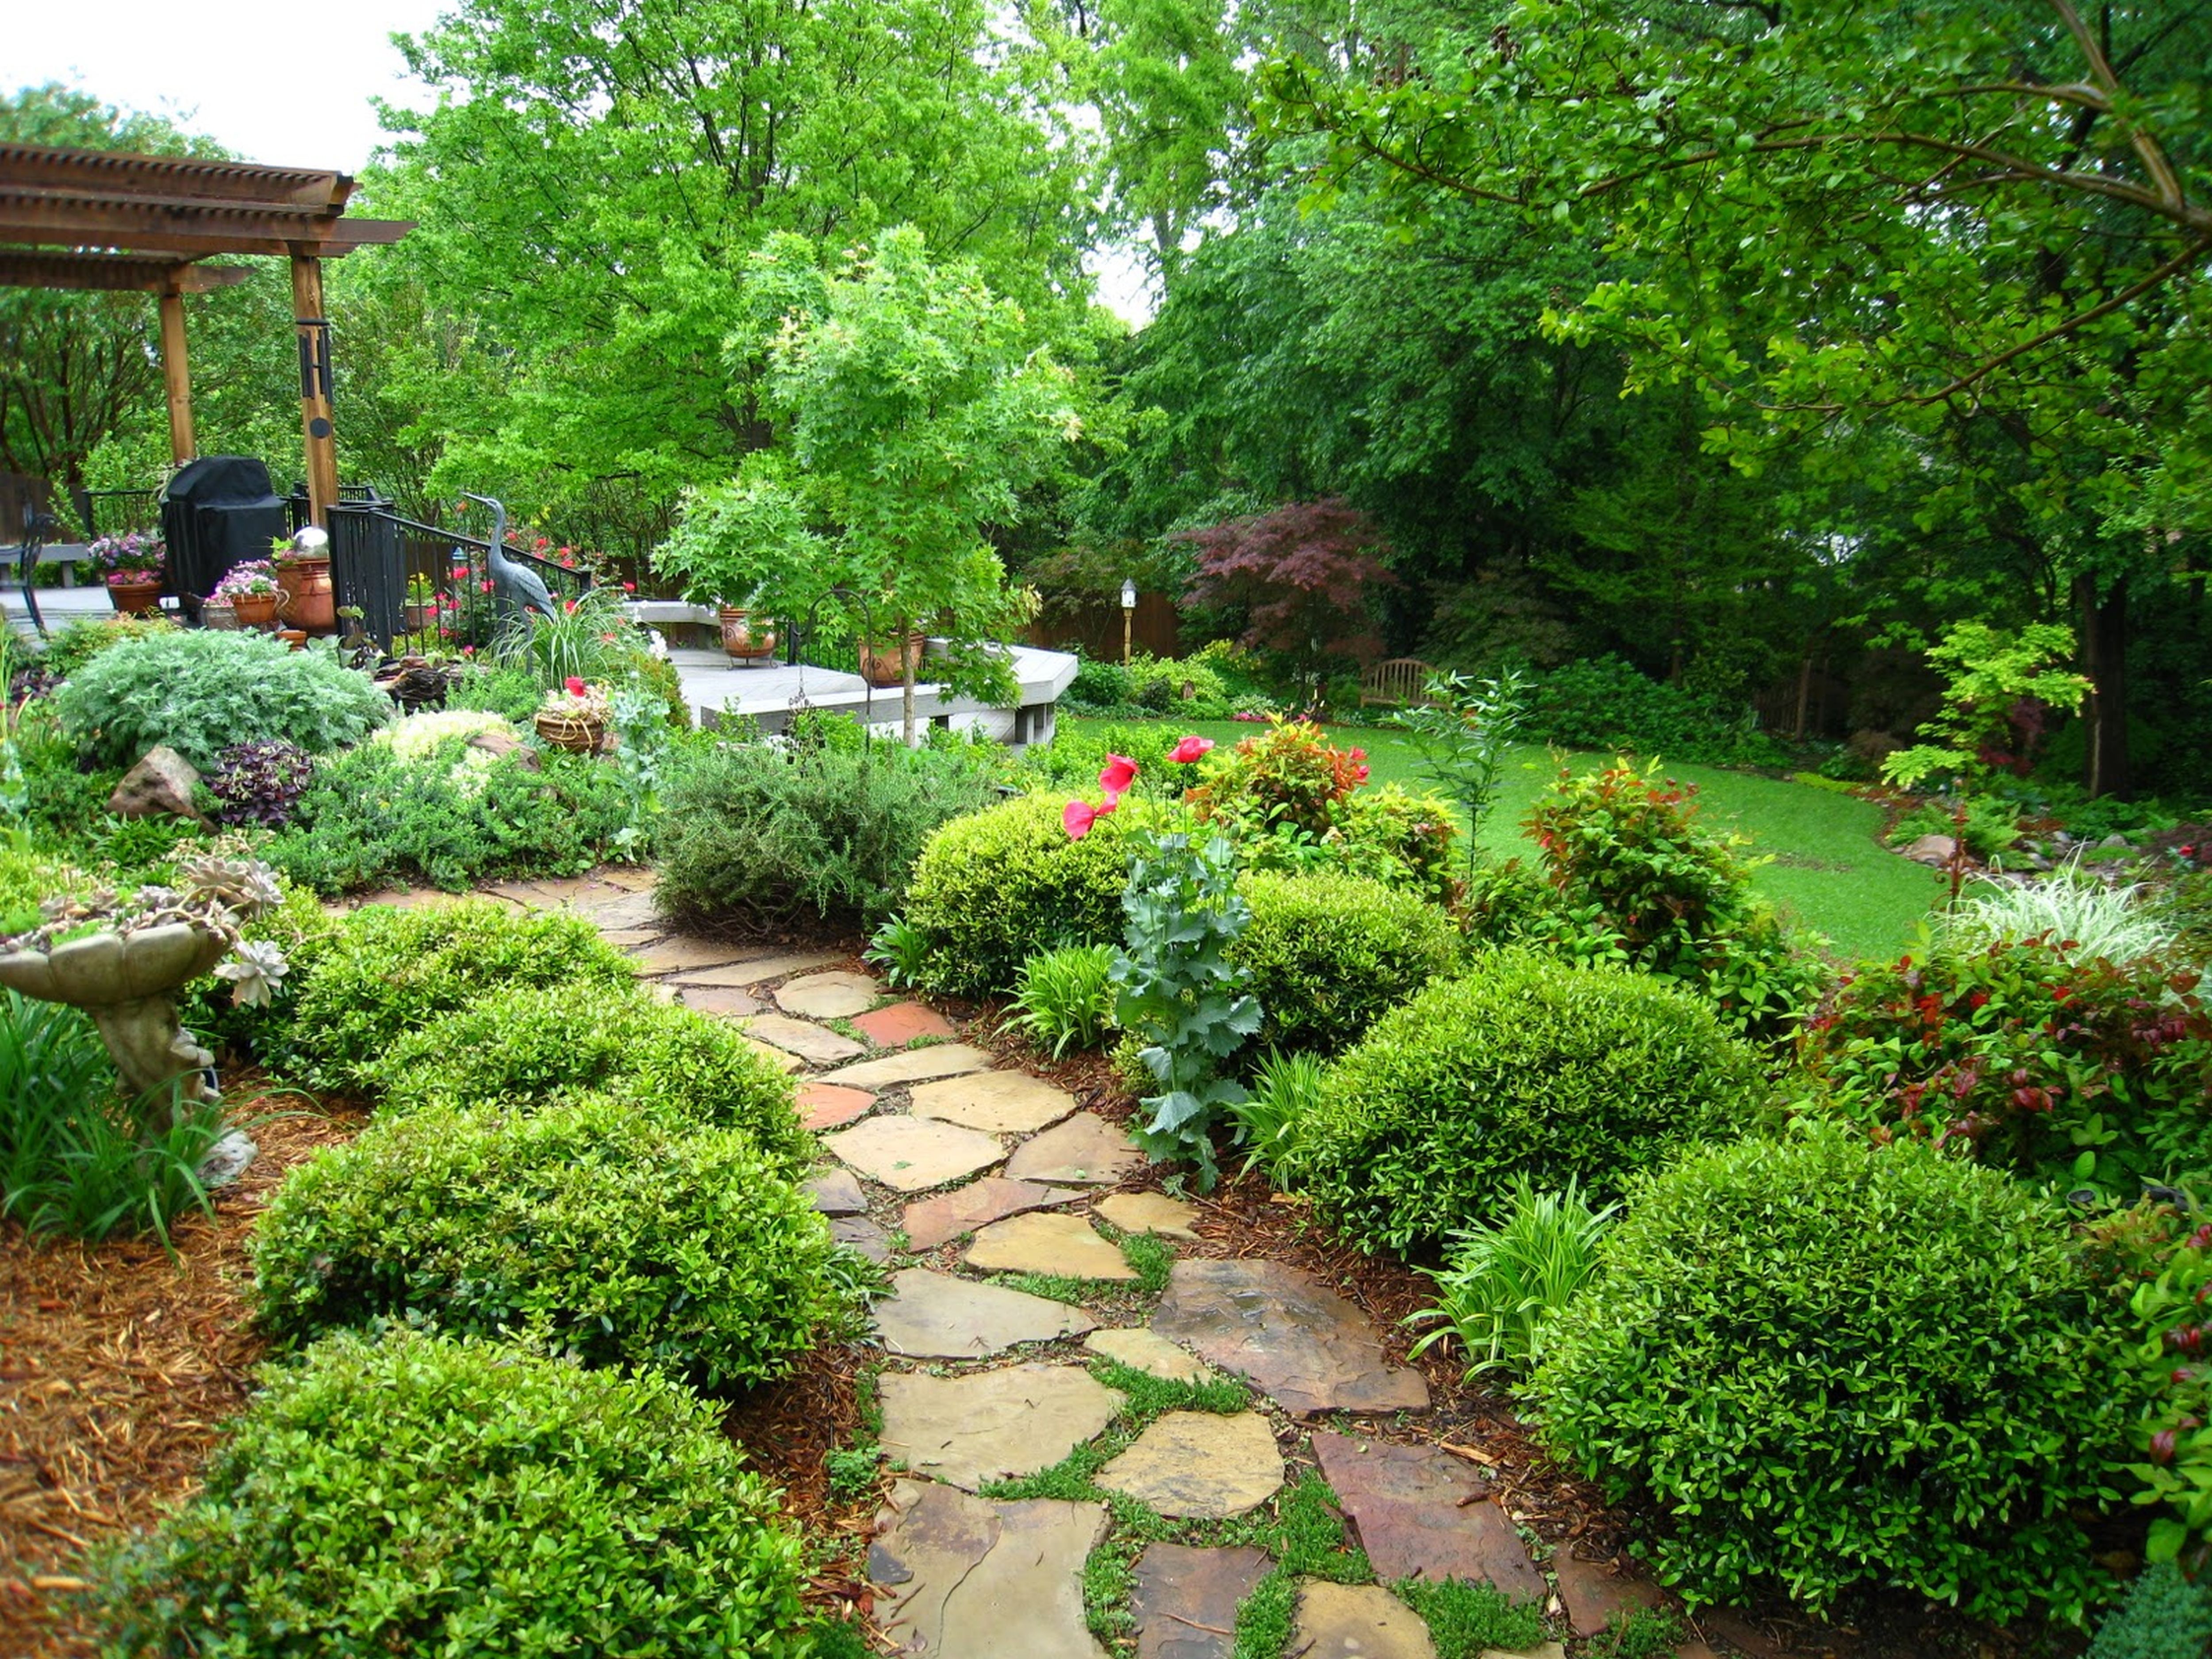 backyard landscaping ideas